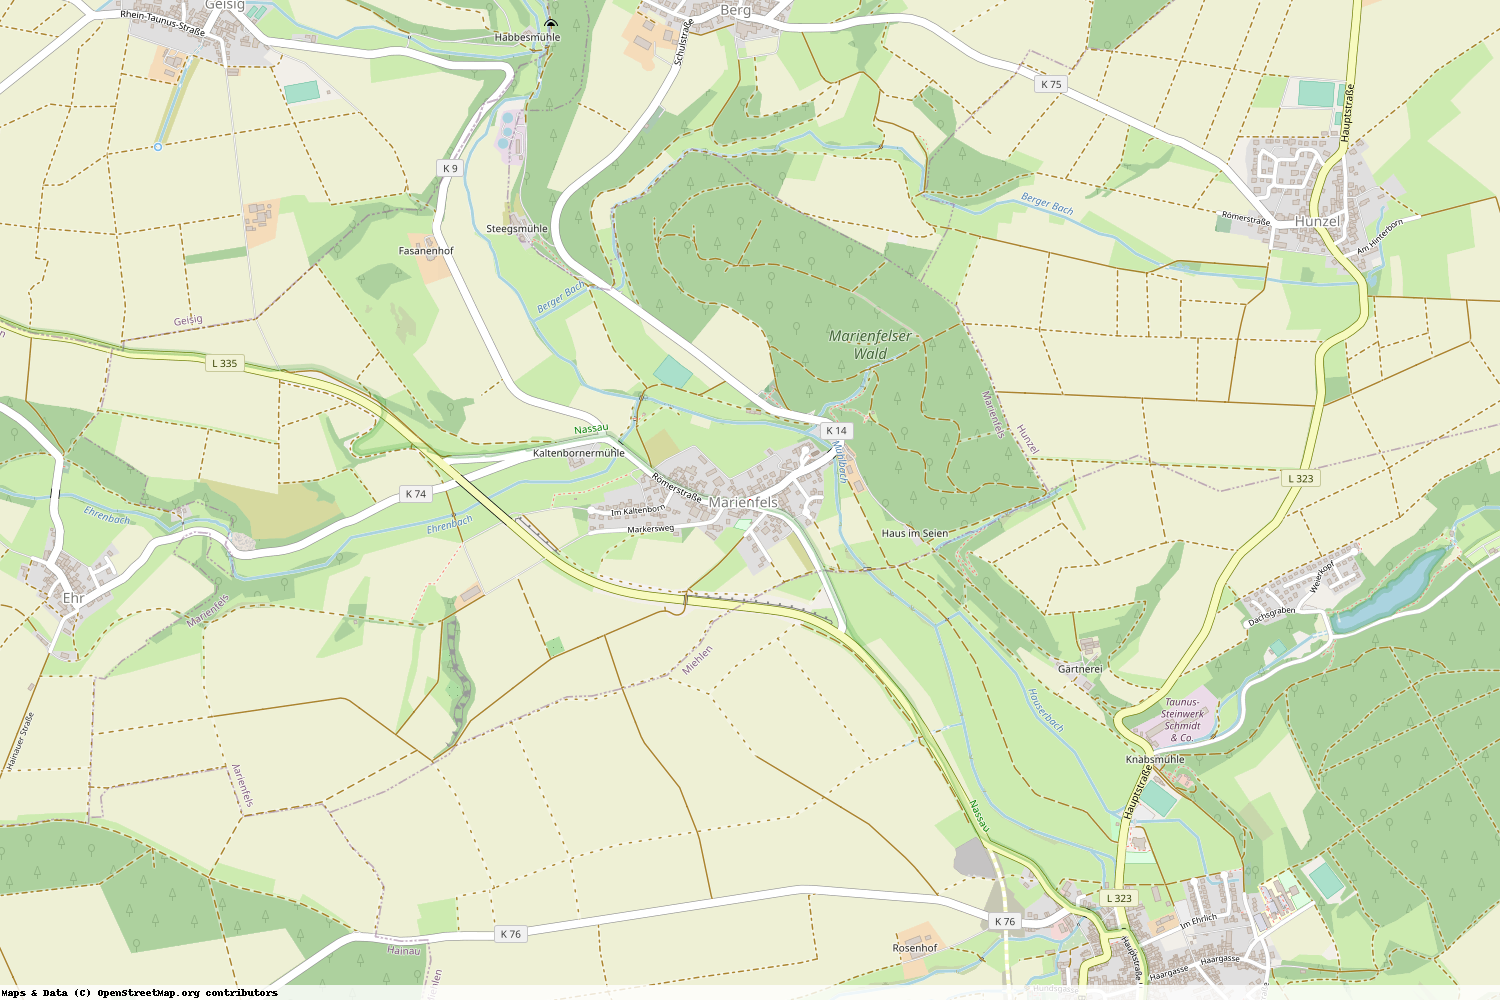 Ist gerade Stromausfall in Rheinland-Pfalz - Rhein-Lahn-Kreis - Marienfels?